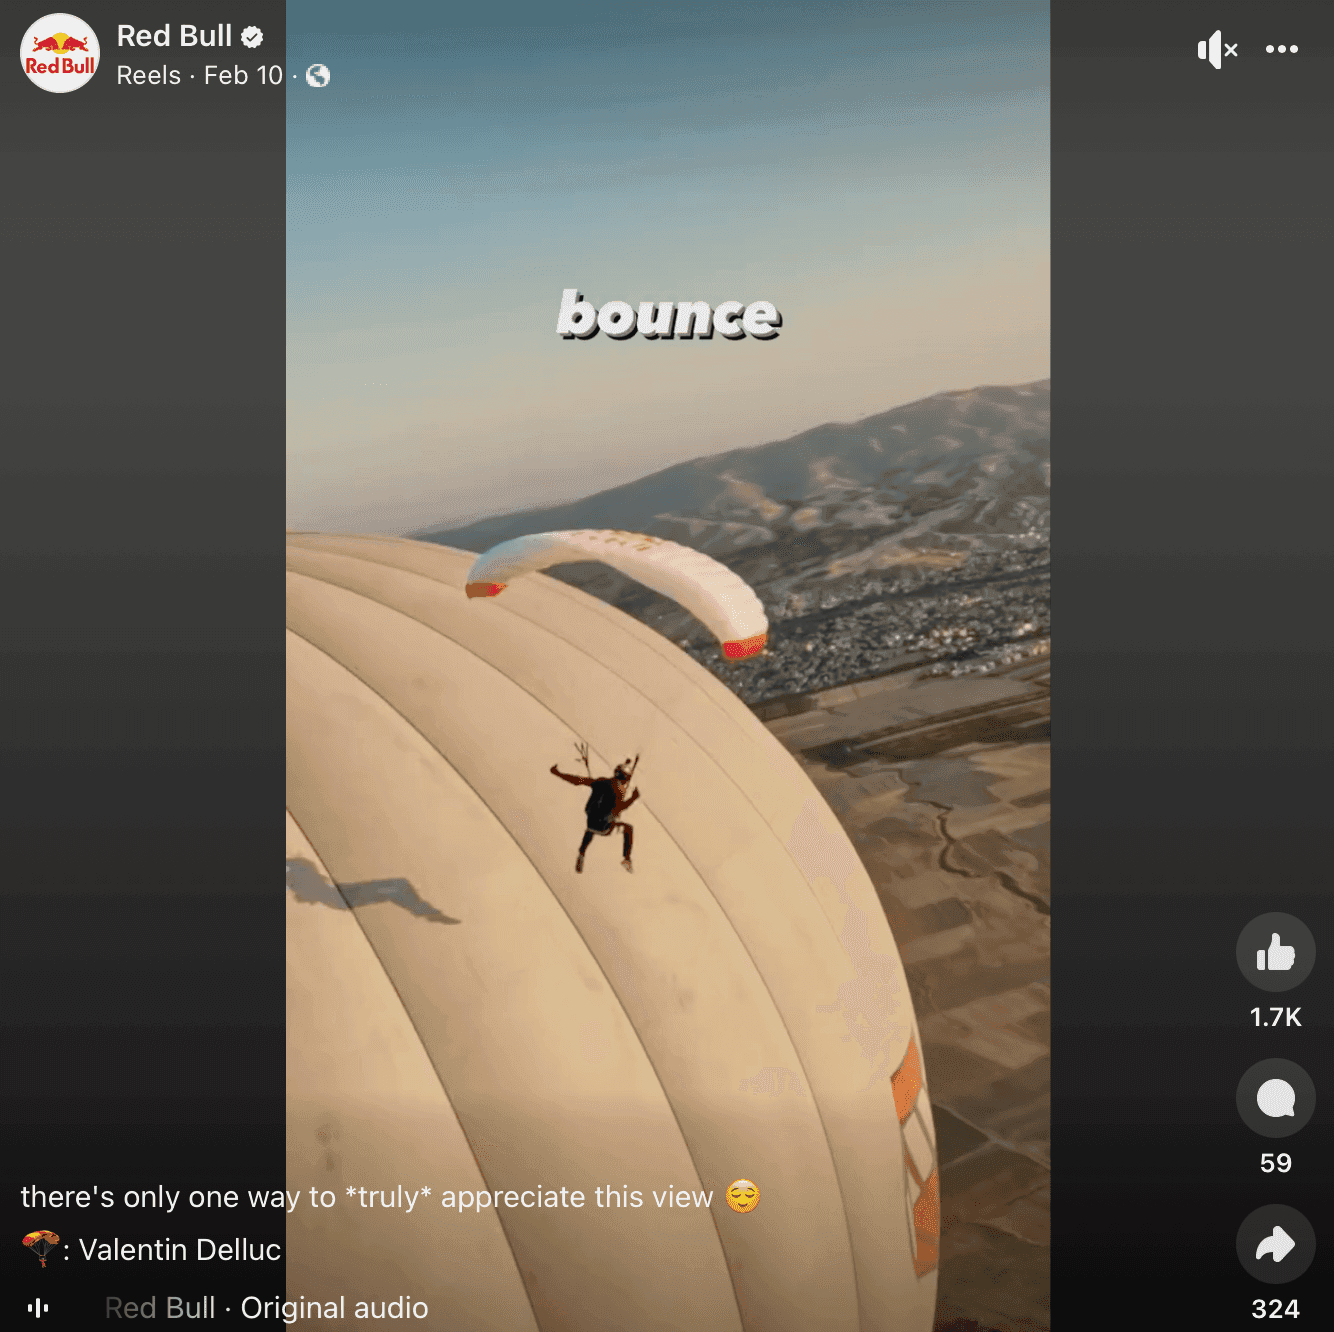 RedBull facebook video of person parachuting